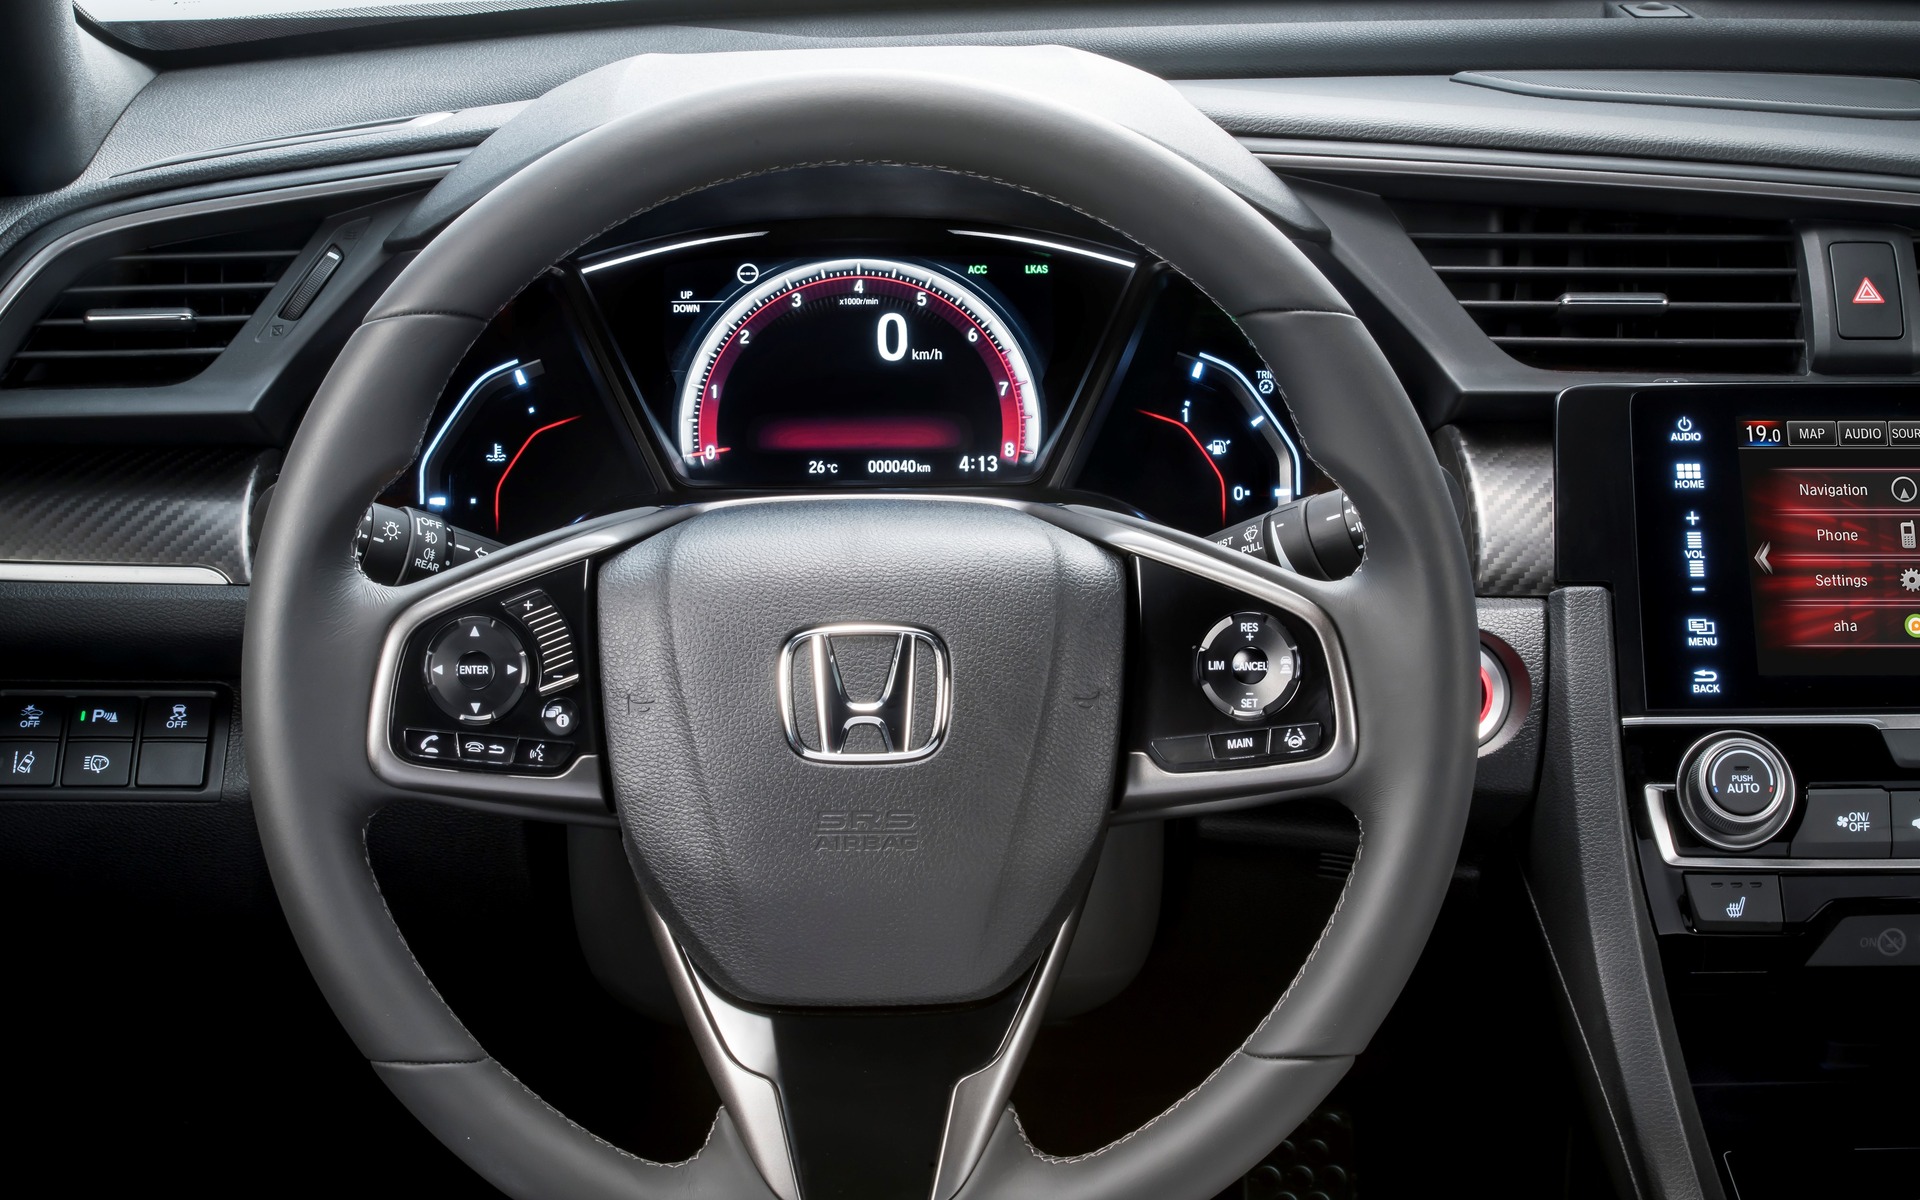 2017 Honda Civic Hatchback (European version)